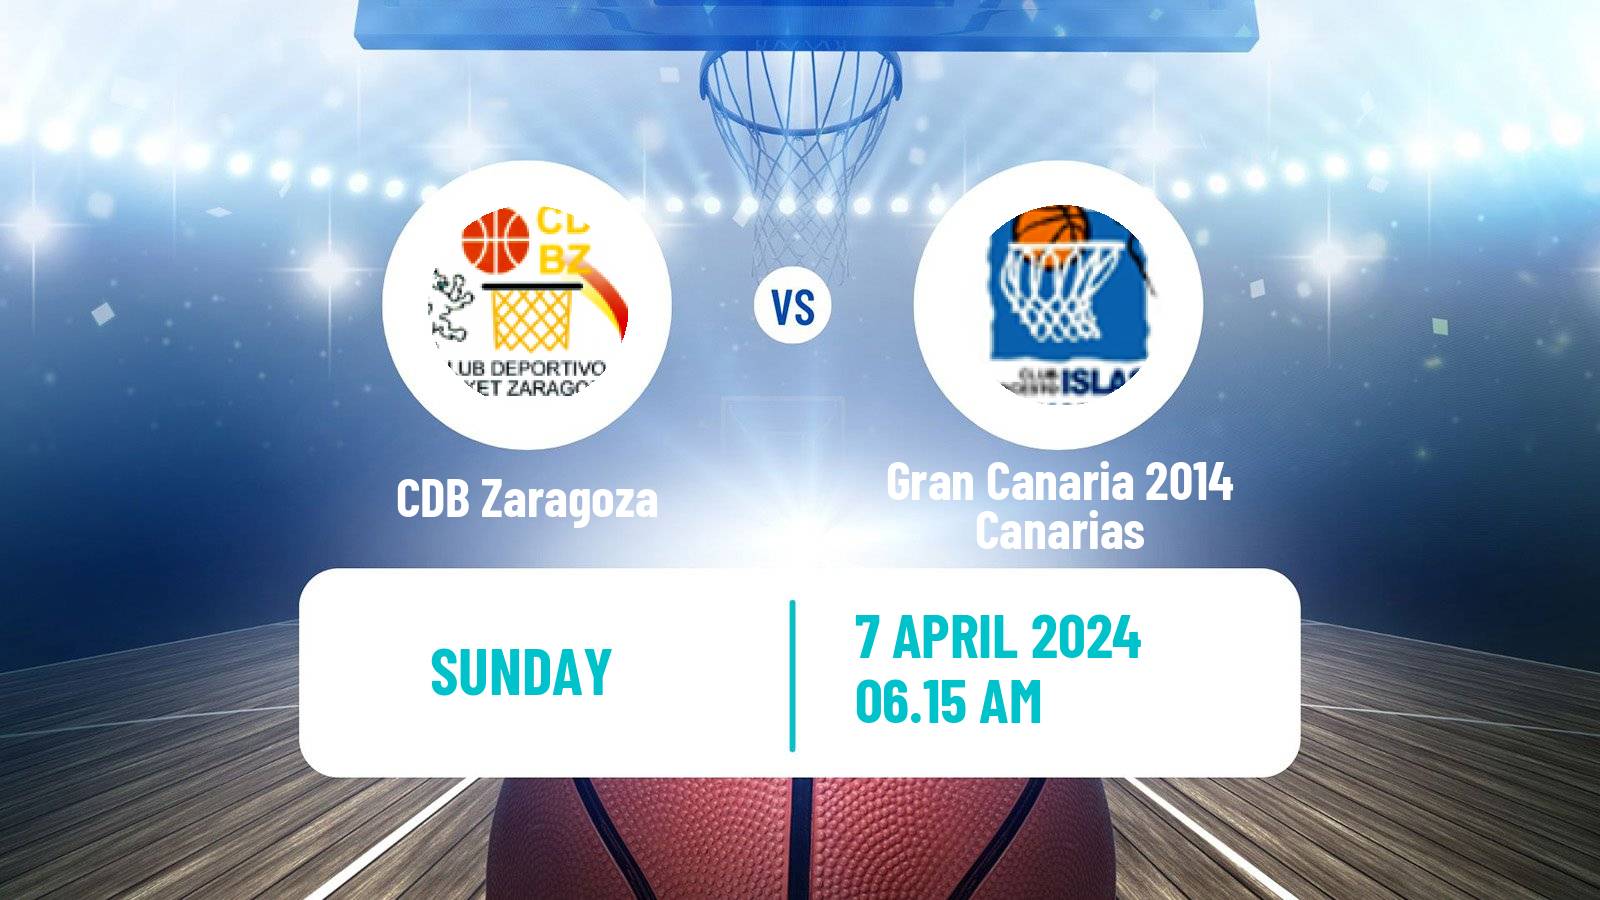 Basketball Spanish Liga Femenina Basketball Zaragoza - Gran Canaria 2014 Canarias